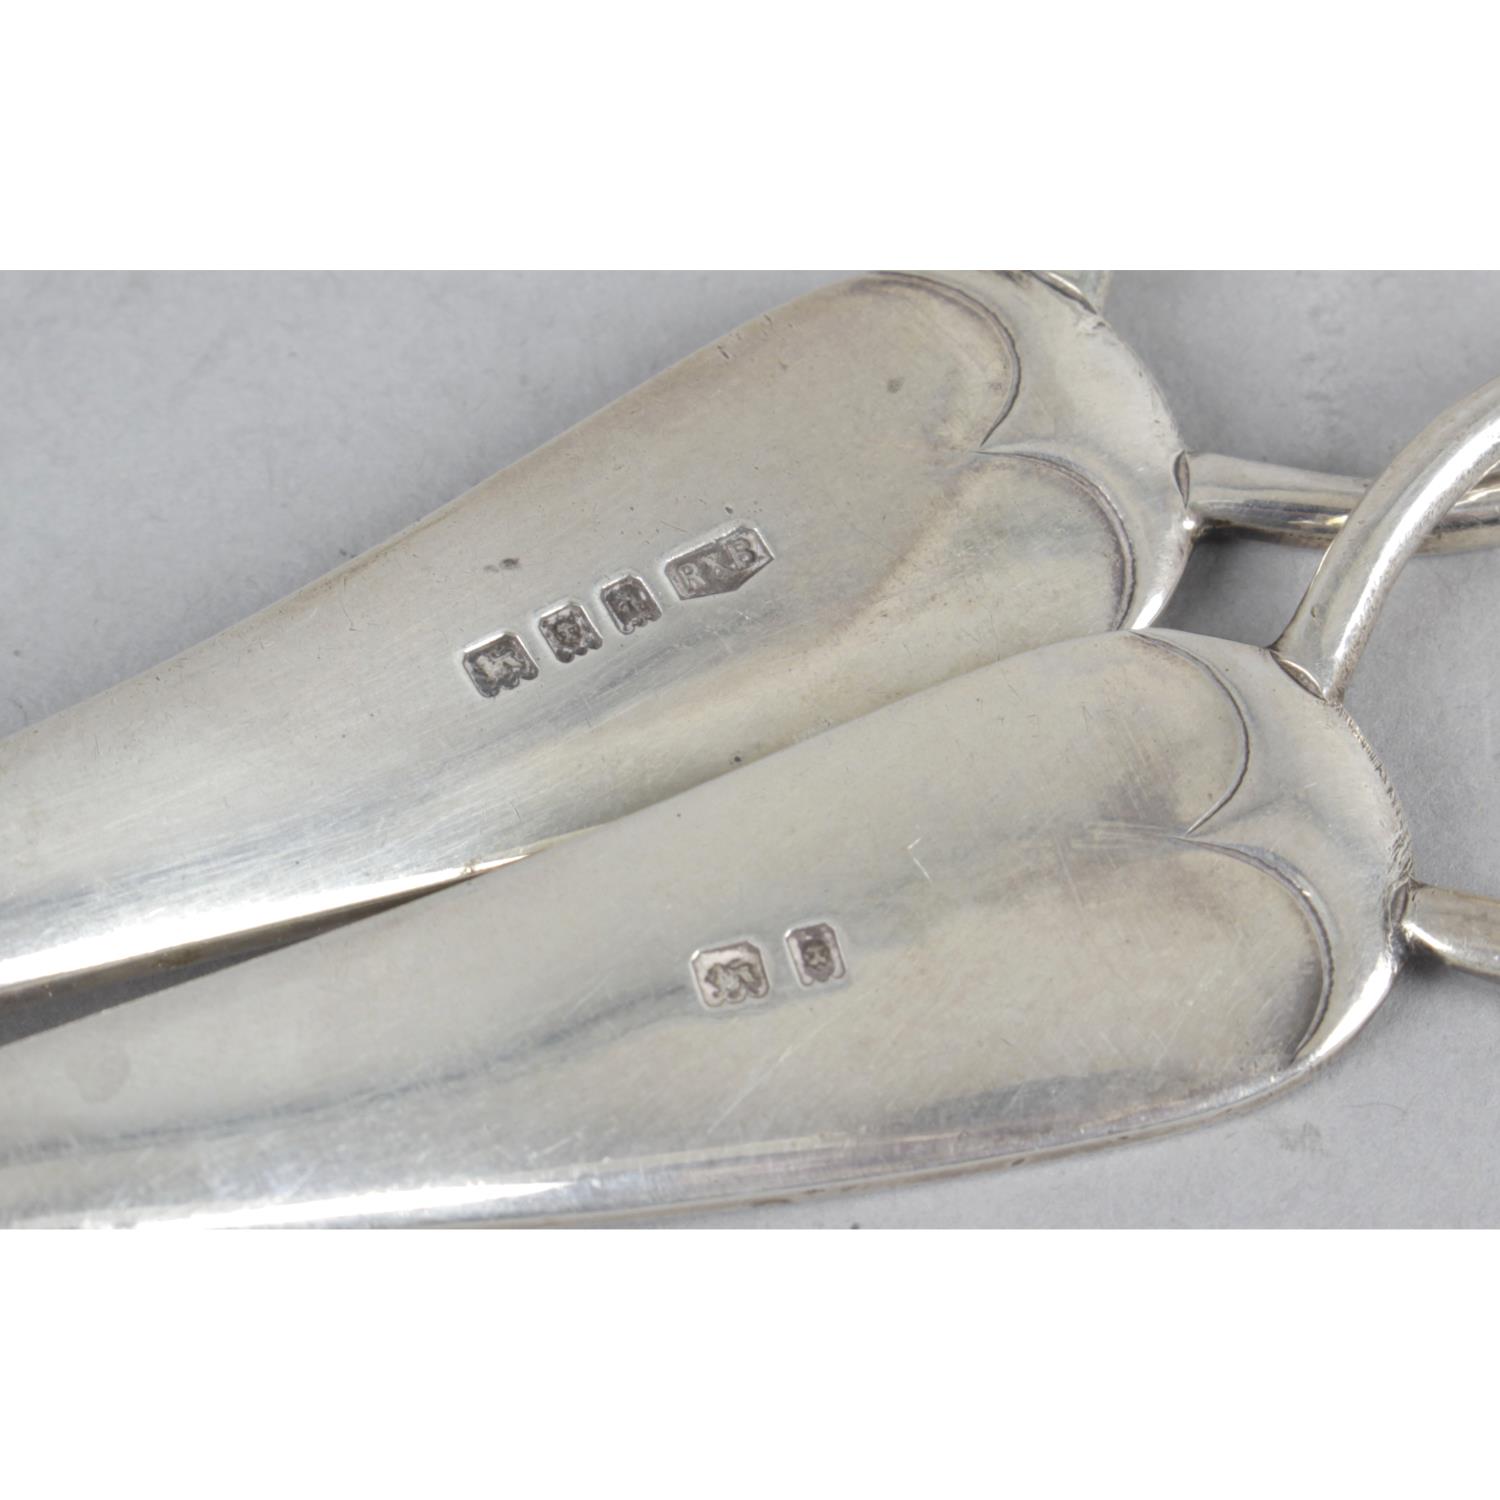 An Edwardian silver pair of grape scissors of plain design with loop handles - stamped Rd 483718. - Bild 2 aus 2